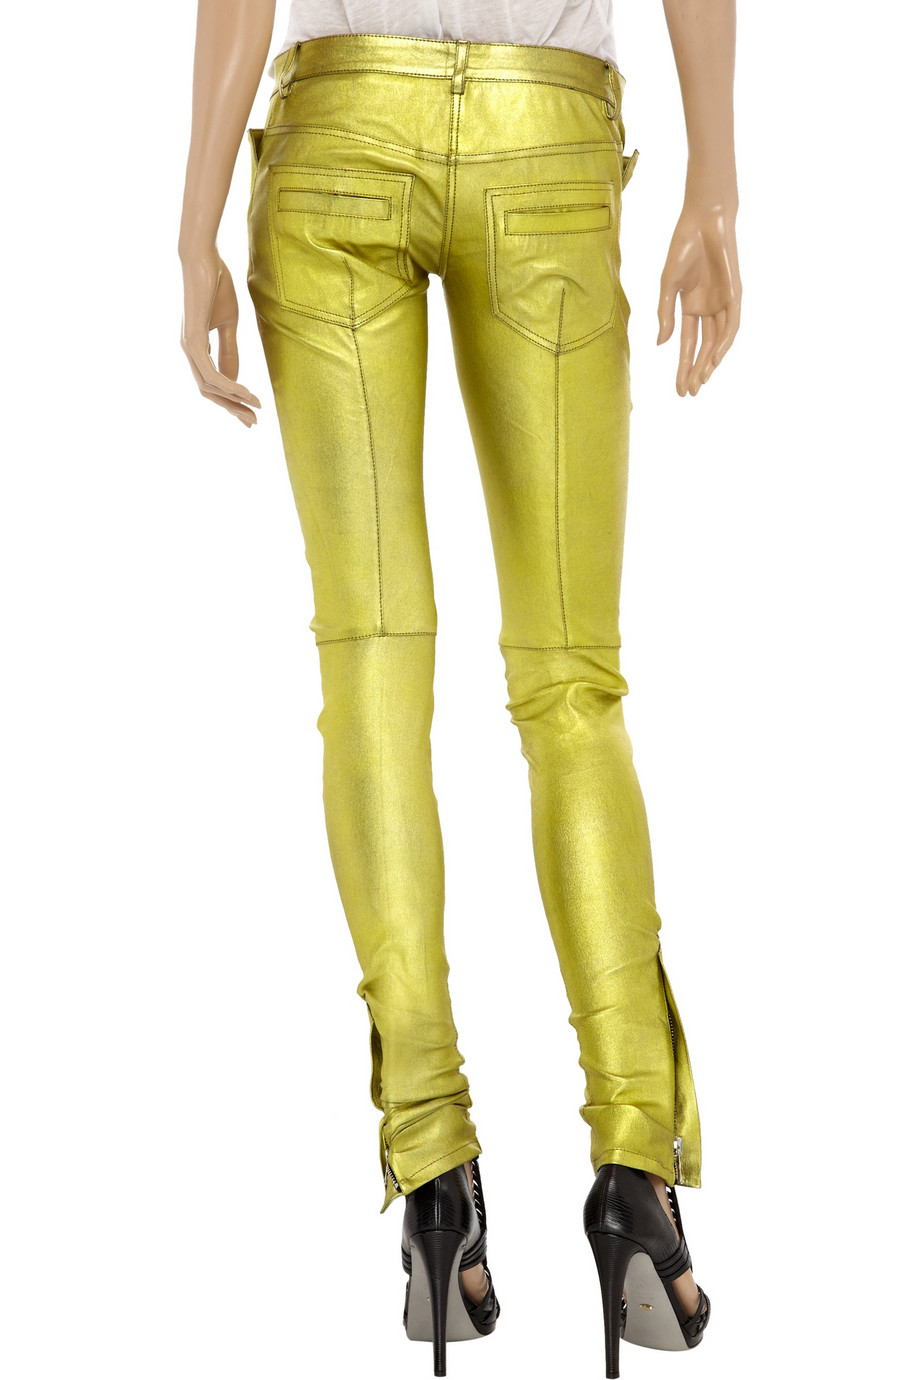 Balmain Metallic Leather Skinny Pants in Gold (Yellow) - Lyst